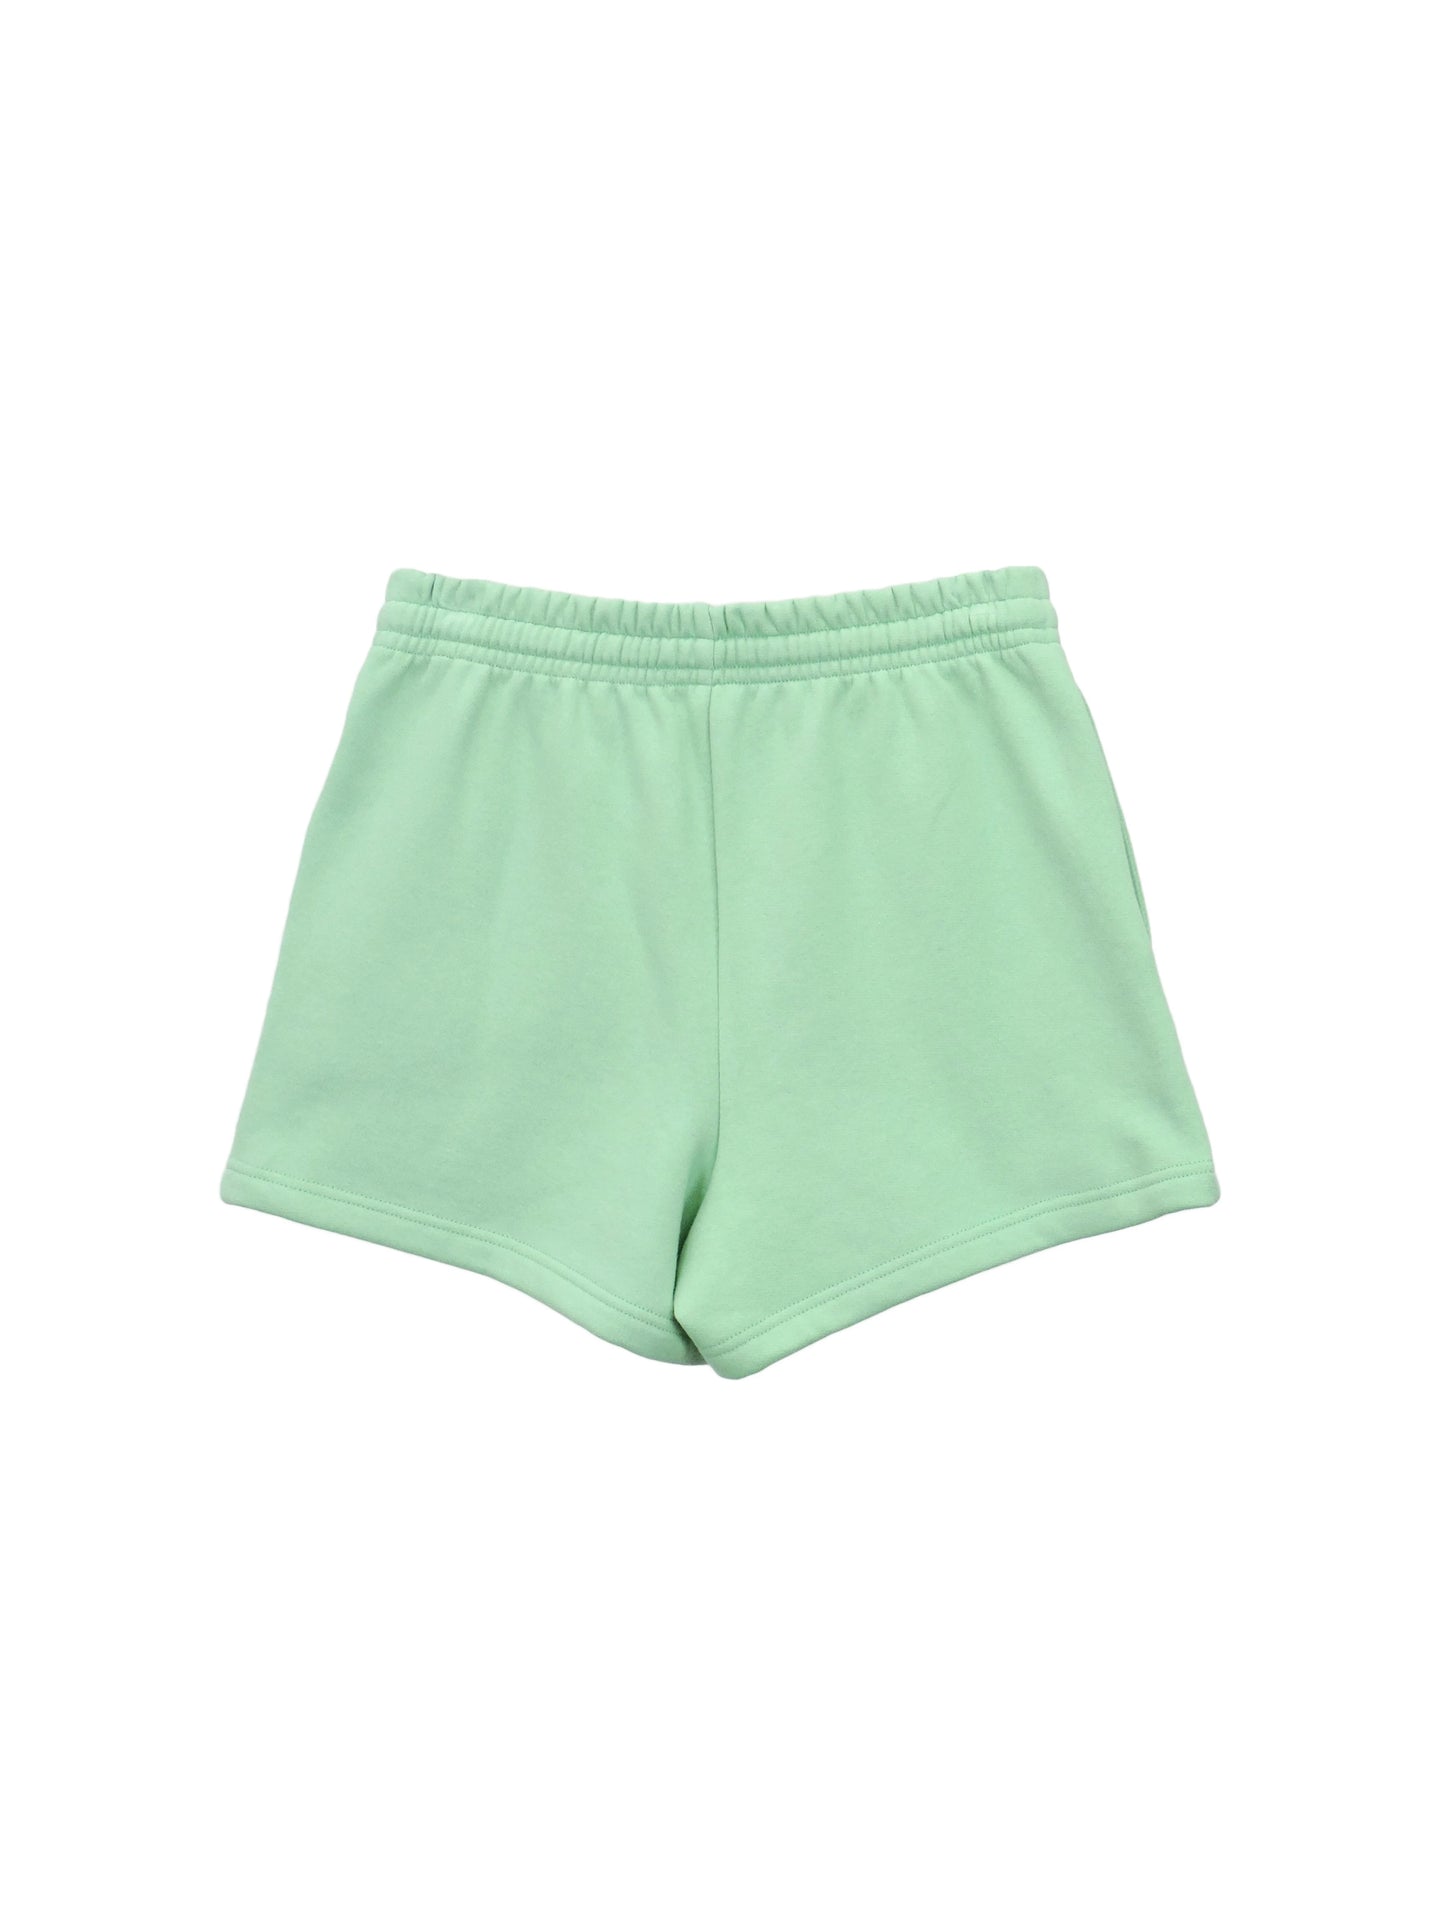 Back of Mint Green Mini Shorts